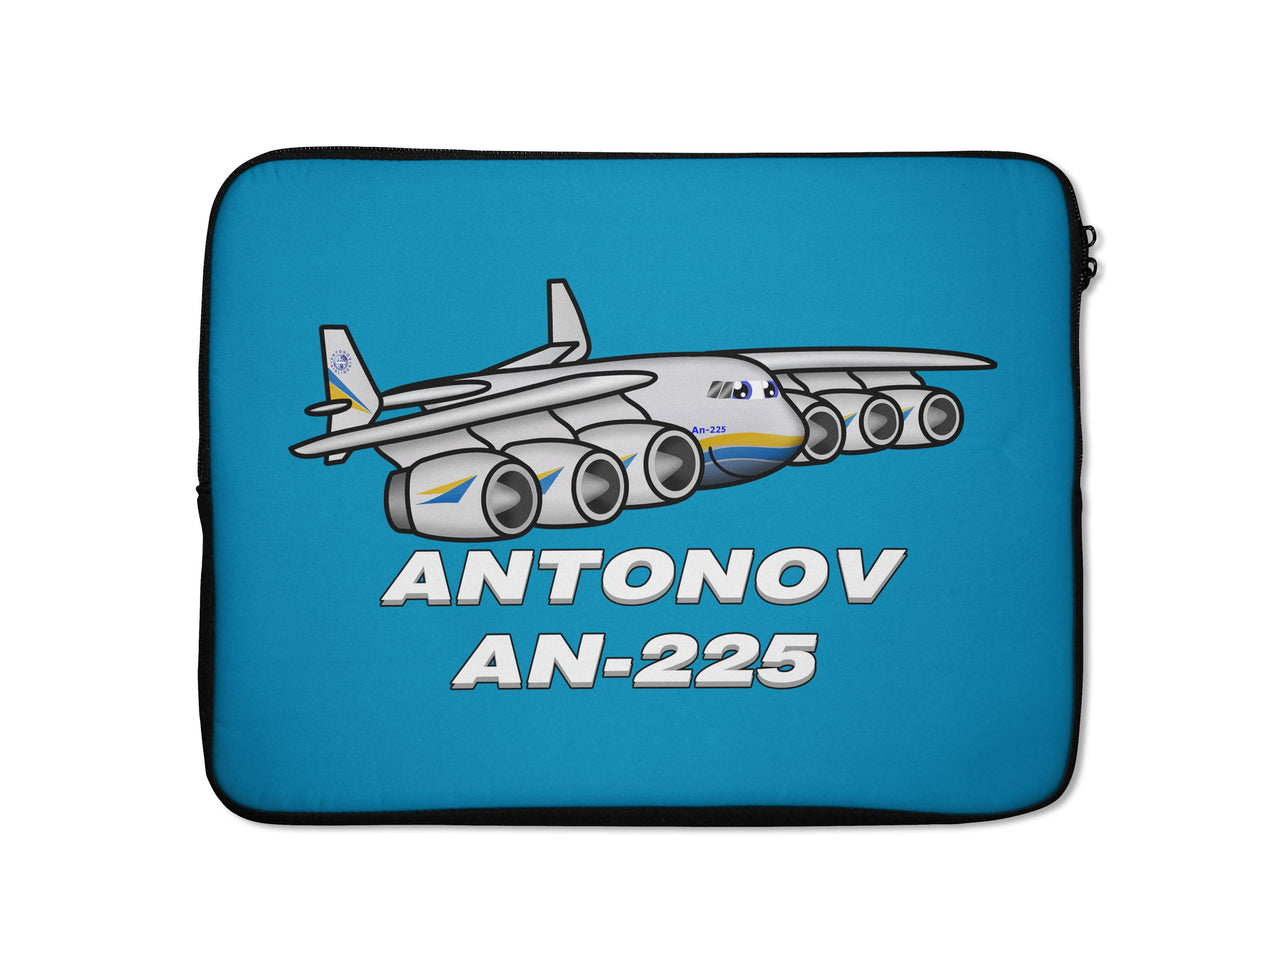 Antonov AN-225 (25) Designed Laptop & Tablet Cases